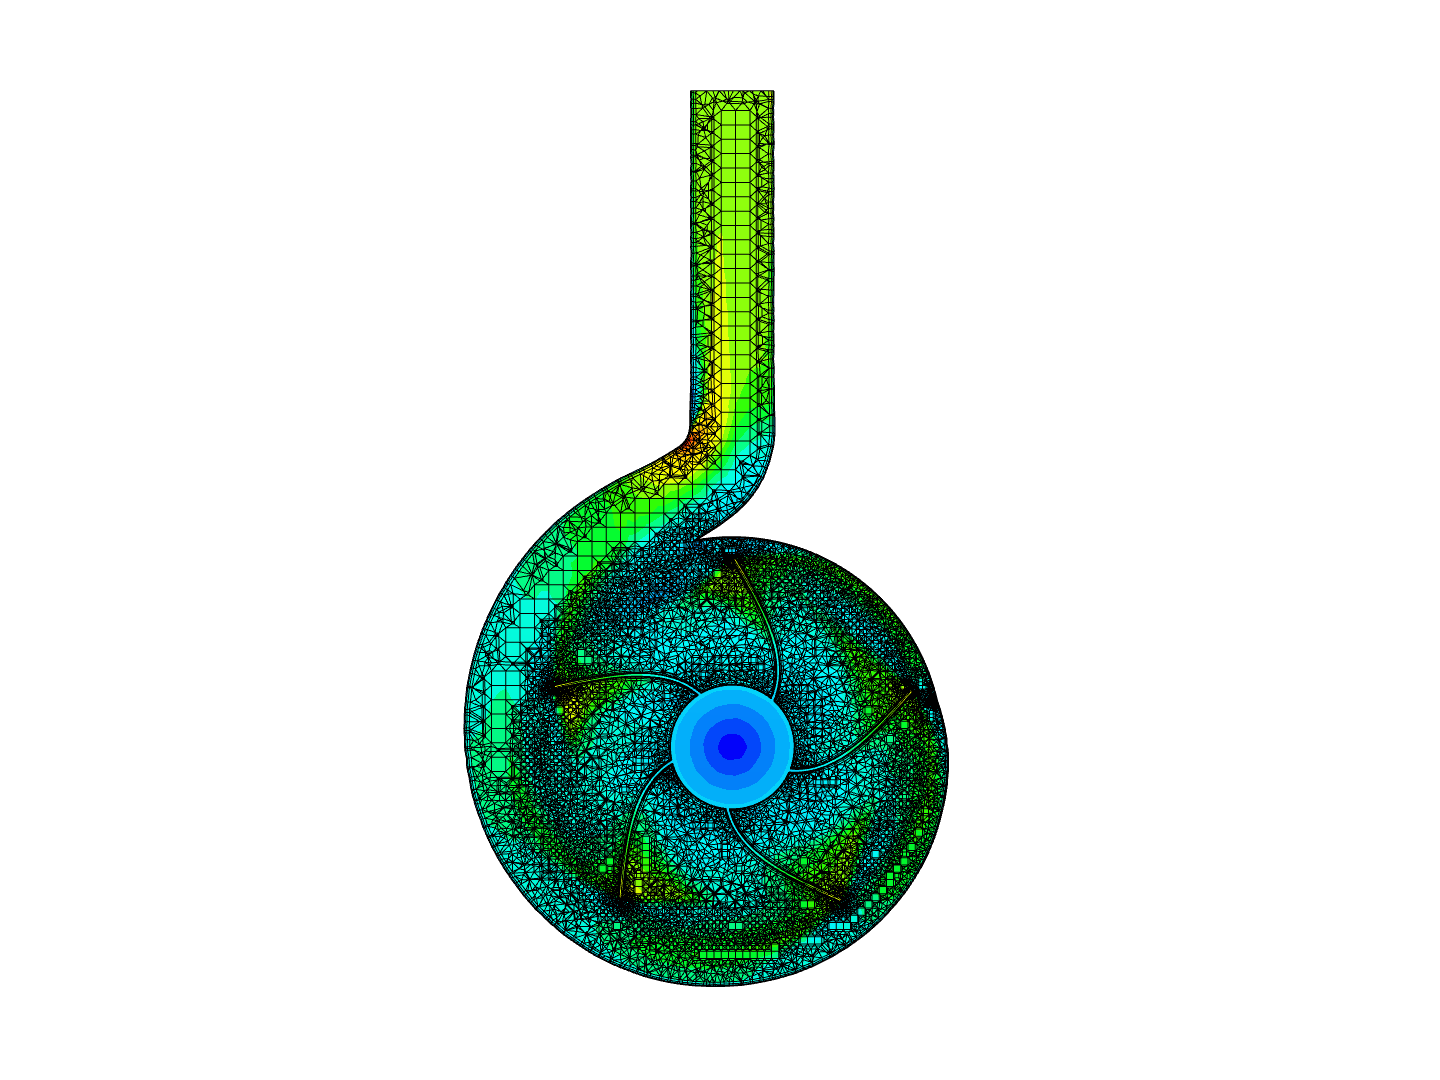 Centrifugal Pump Simulation by Coursera image